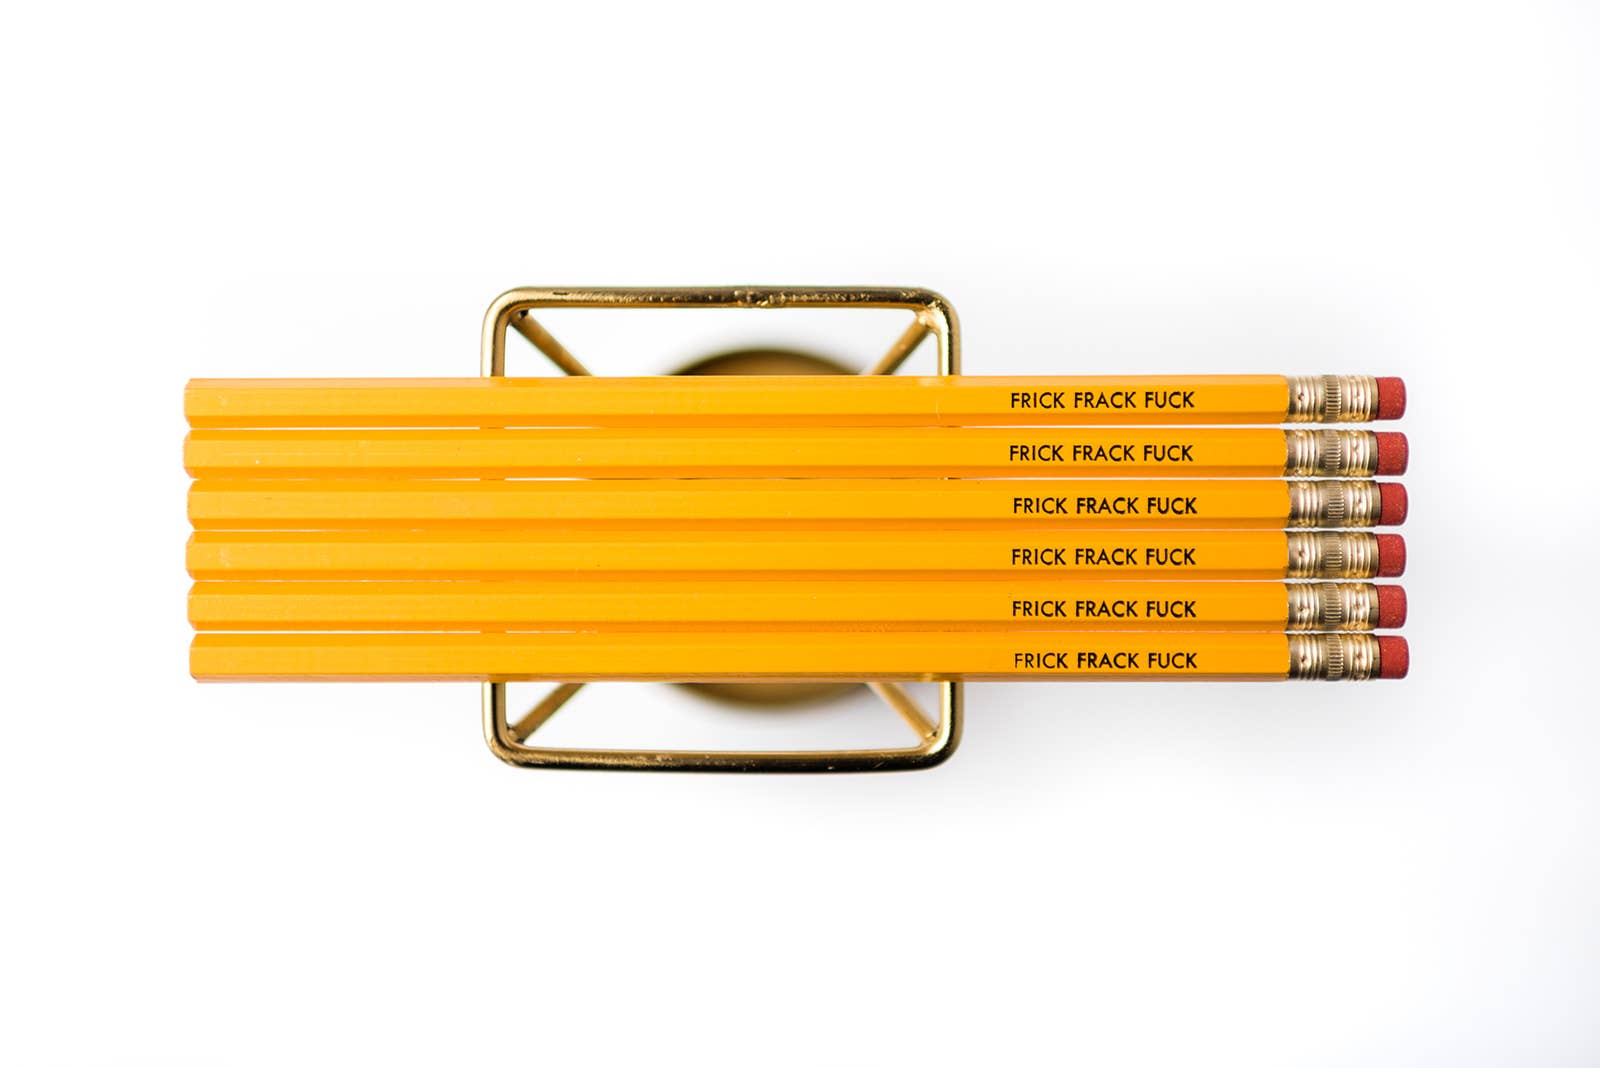 Frick Frack F*ck Pencils